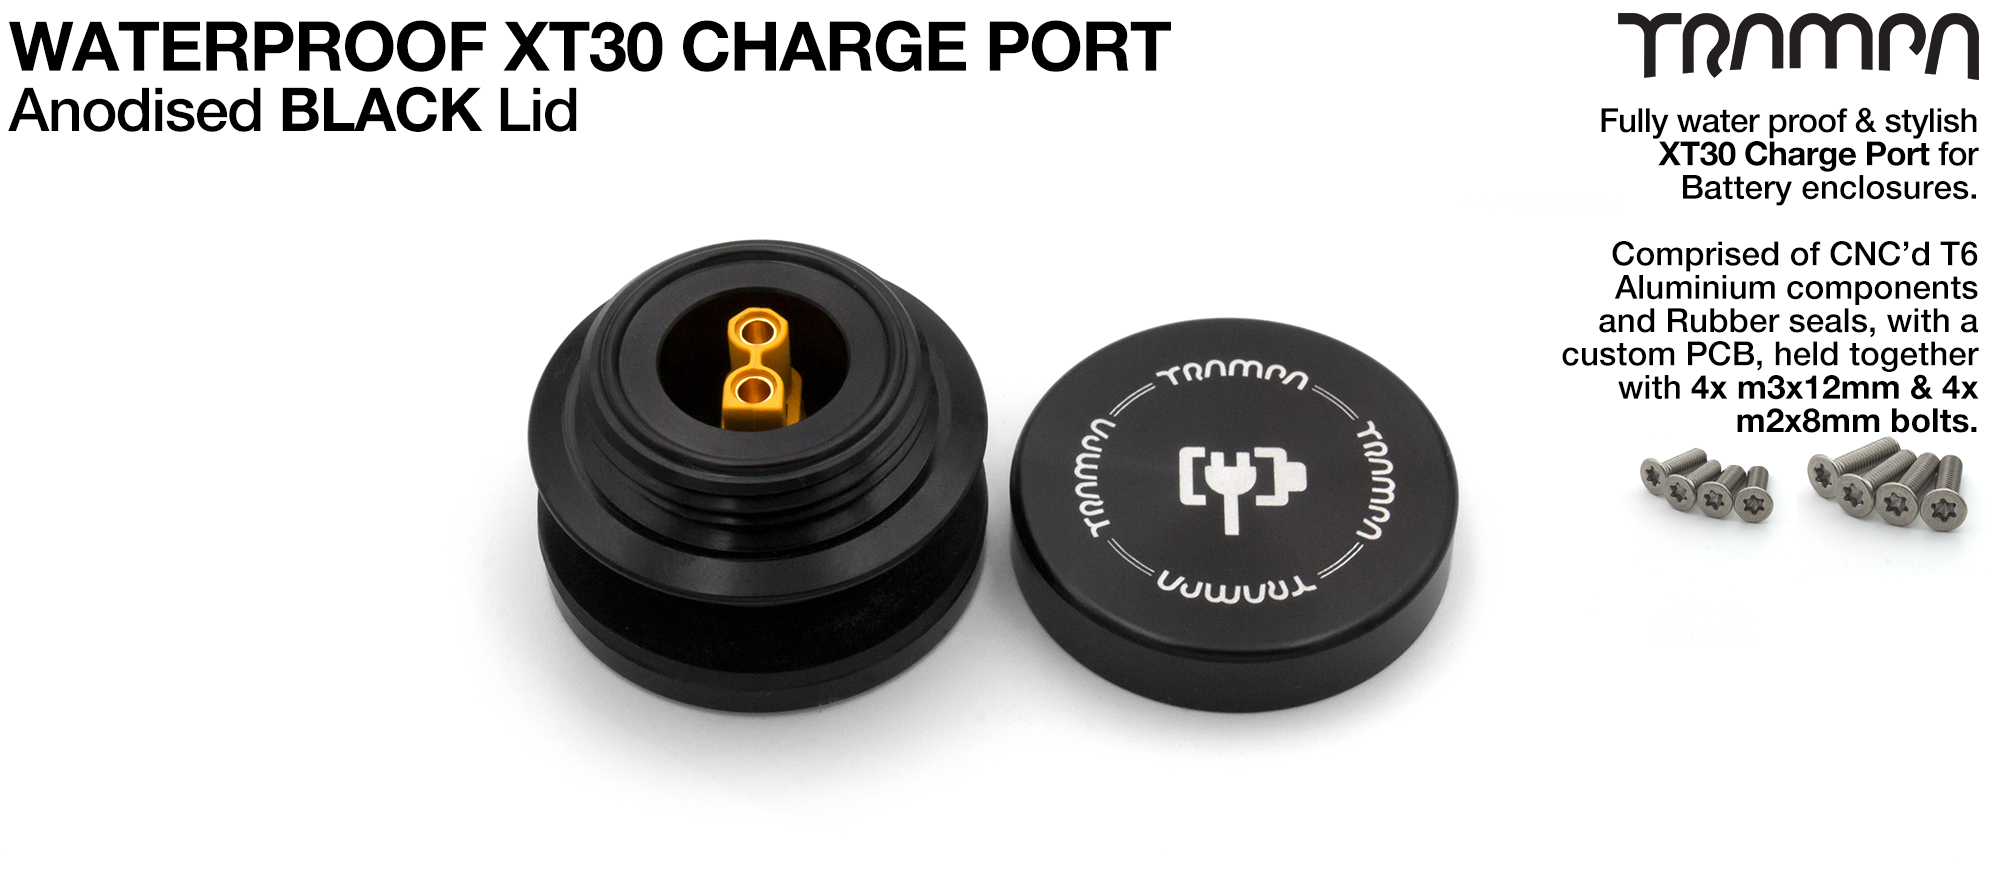 ORRSOM GT XT30 WATERPROOF Charge Port - BLACK